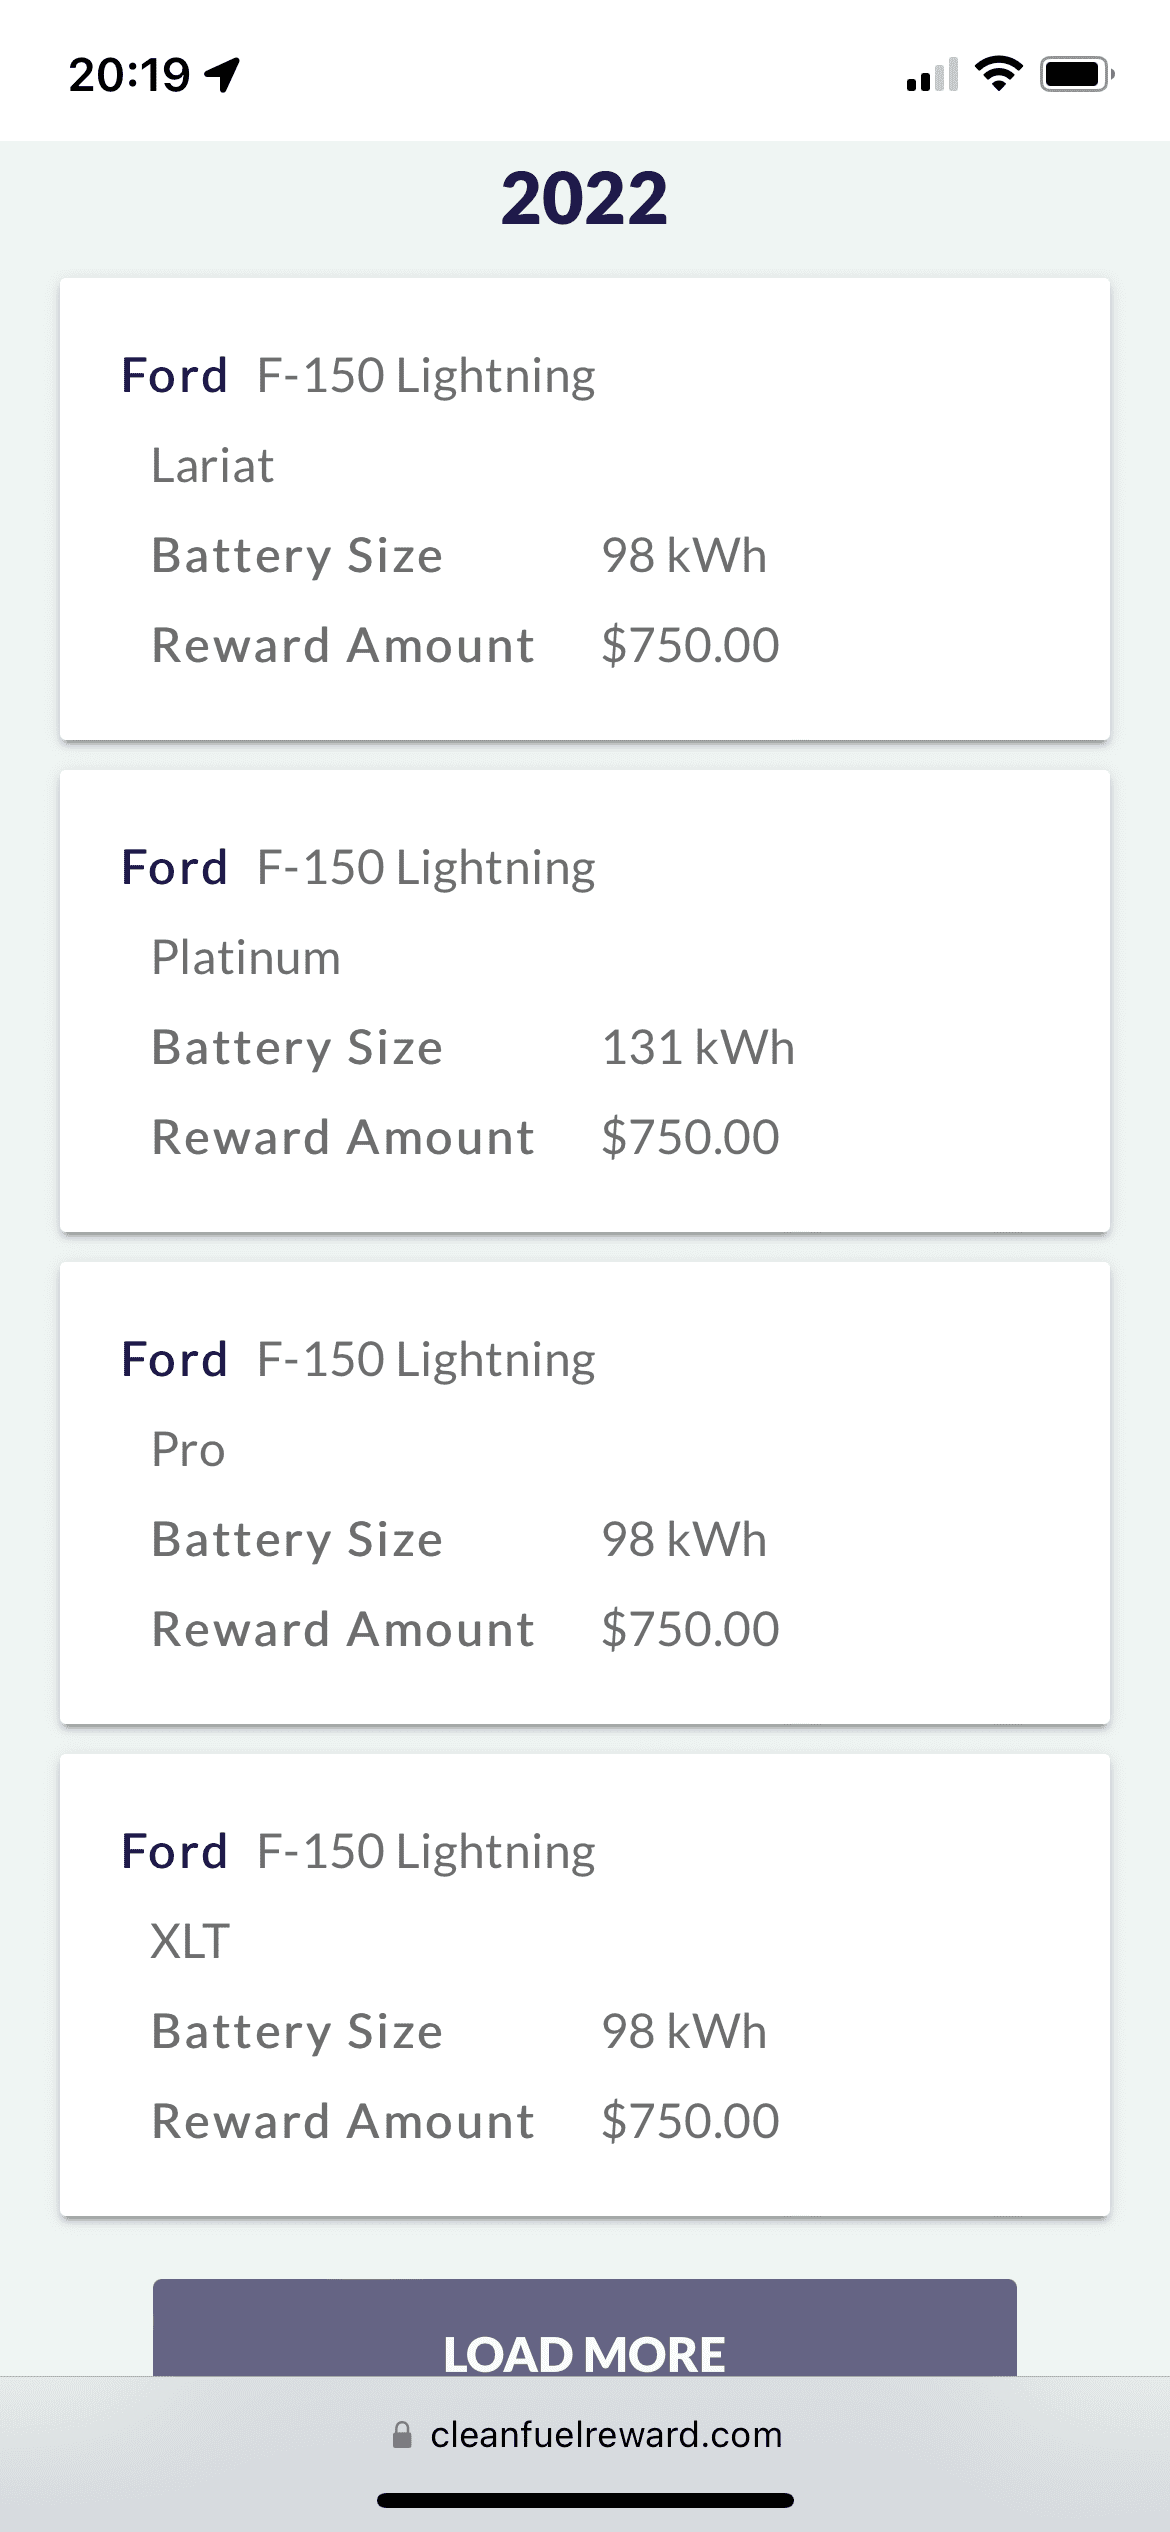 Ford F-150 Lightning All Lightning models qualify for California Clean Vehicle Rebate Project - CVRP $2k Rebate D7DAA751-9336-490B-8725-01FEB8A97120